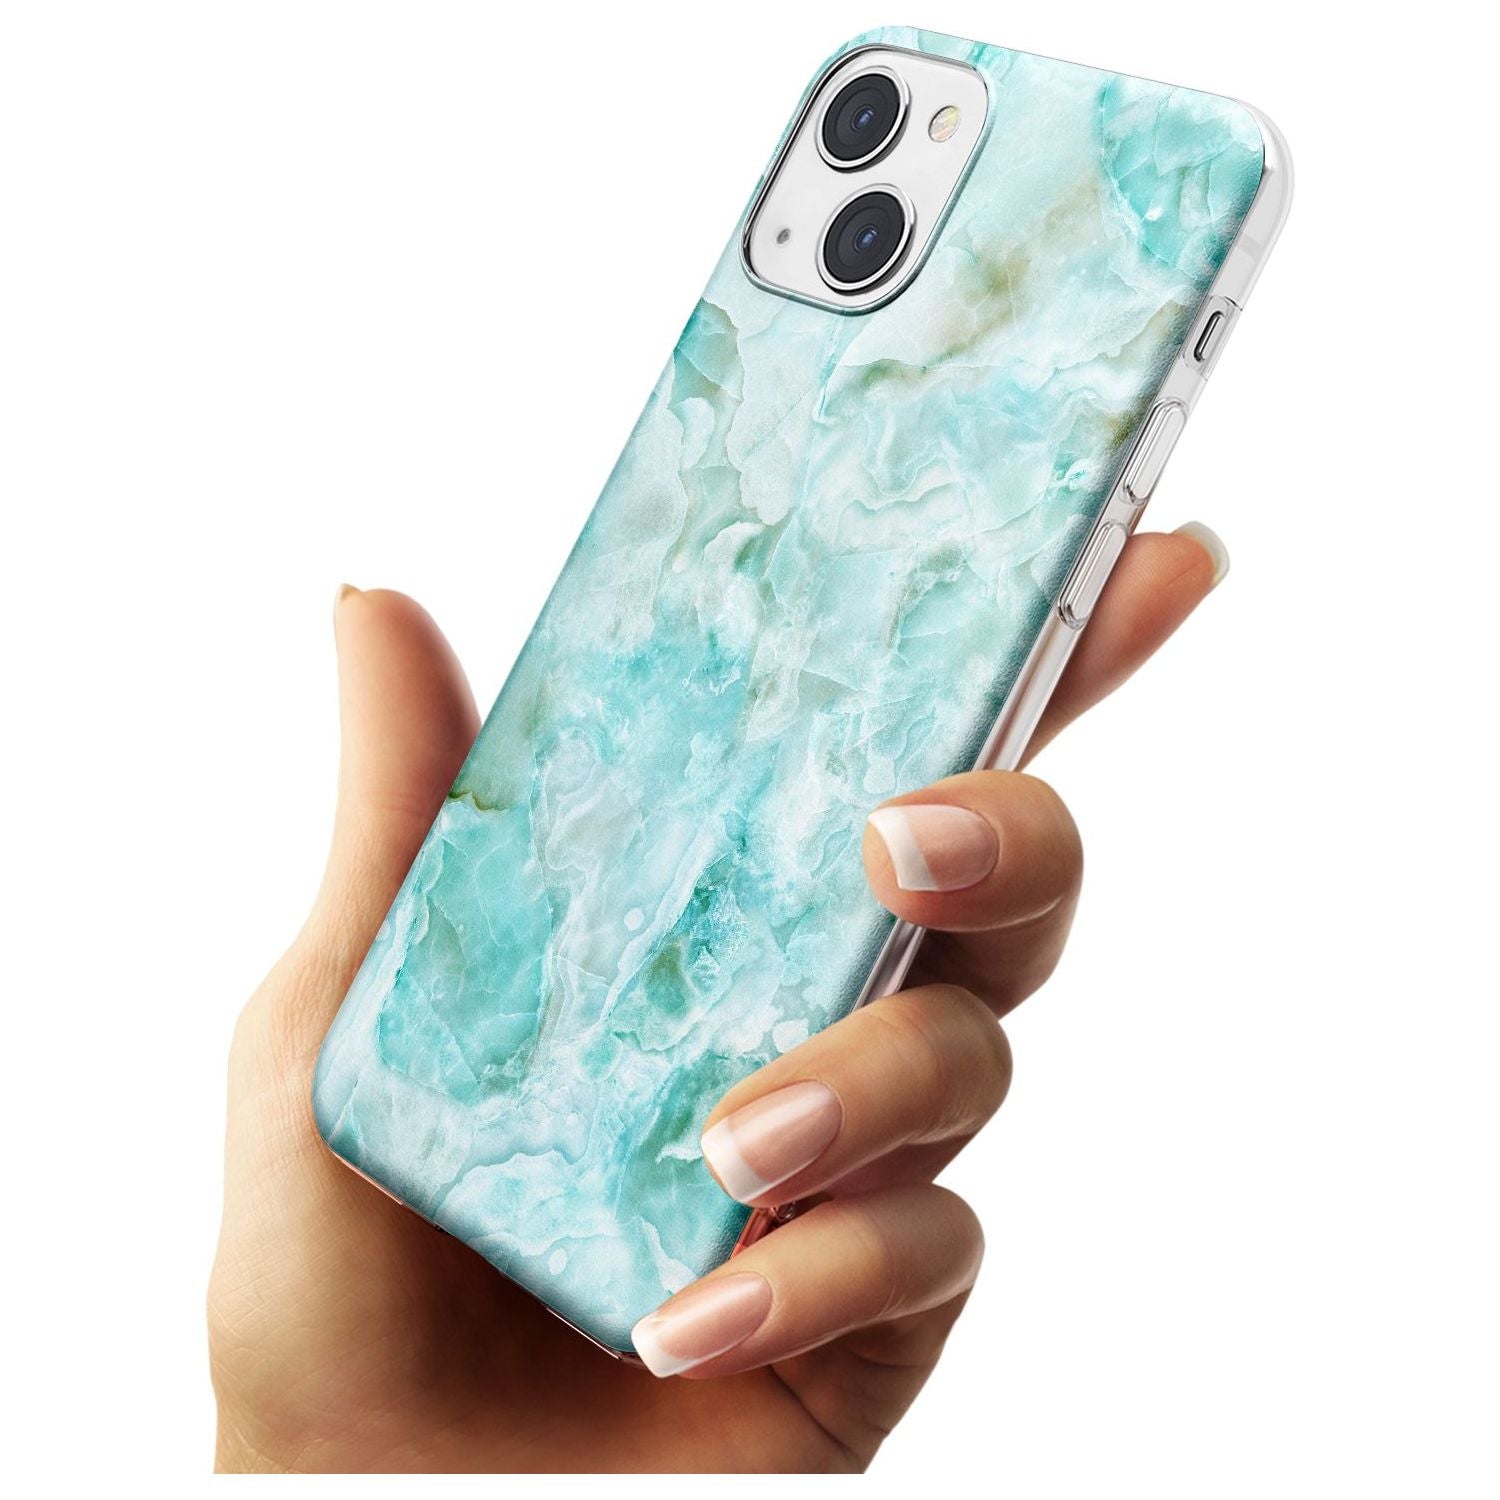 Turquoise Aqua Onyx Marble